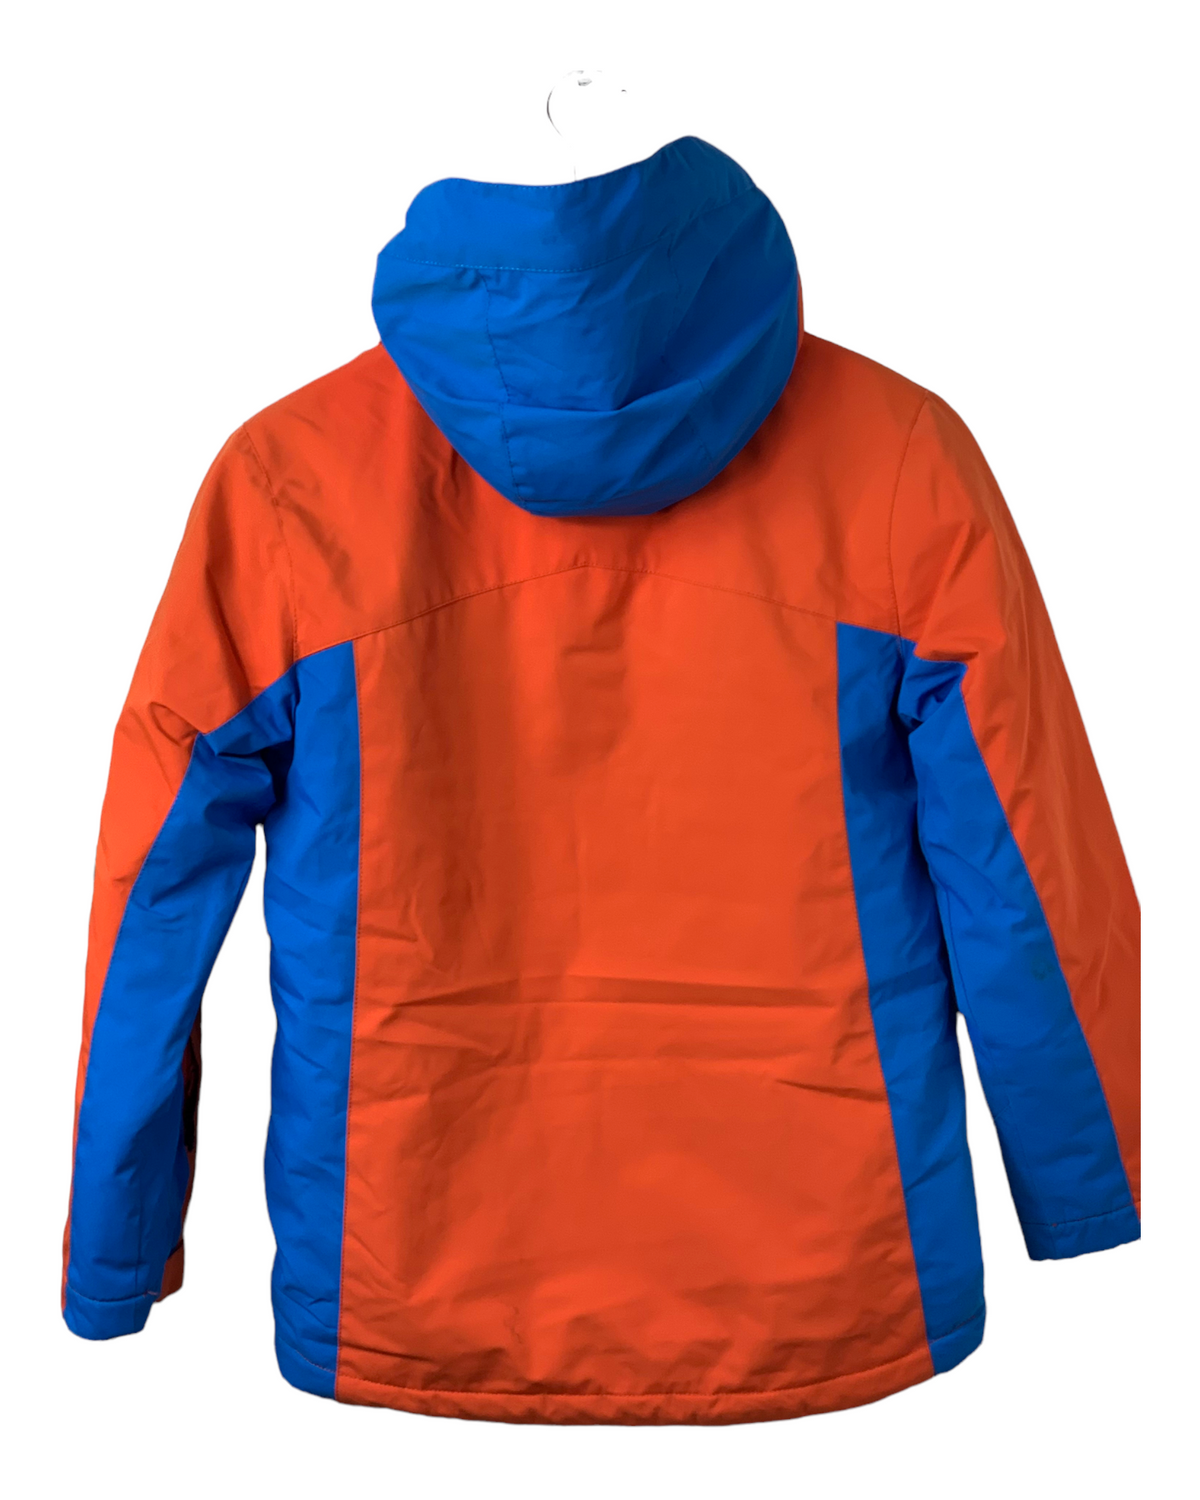 Veste ski Fusalp orange/bleu 10 ans